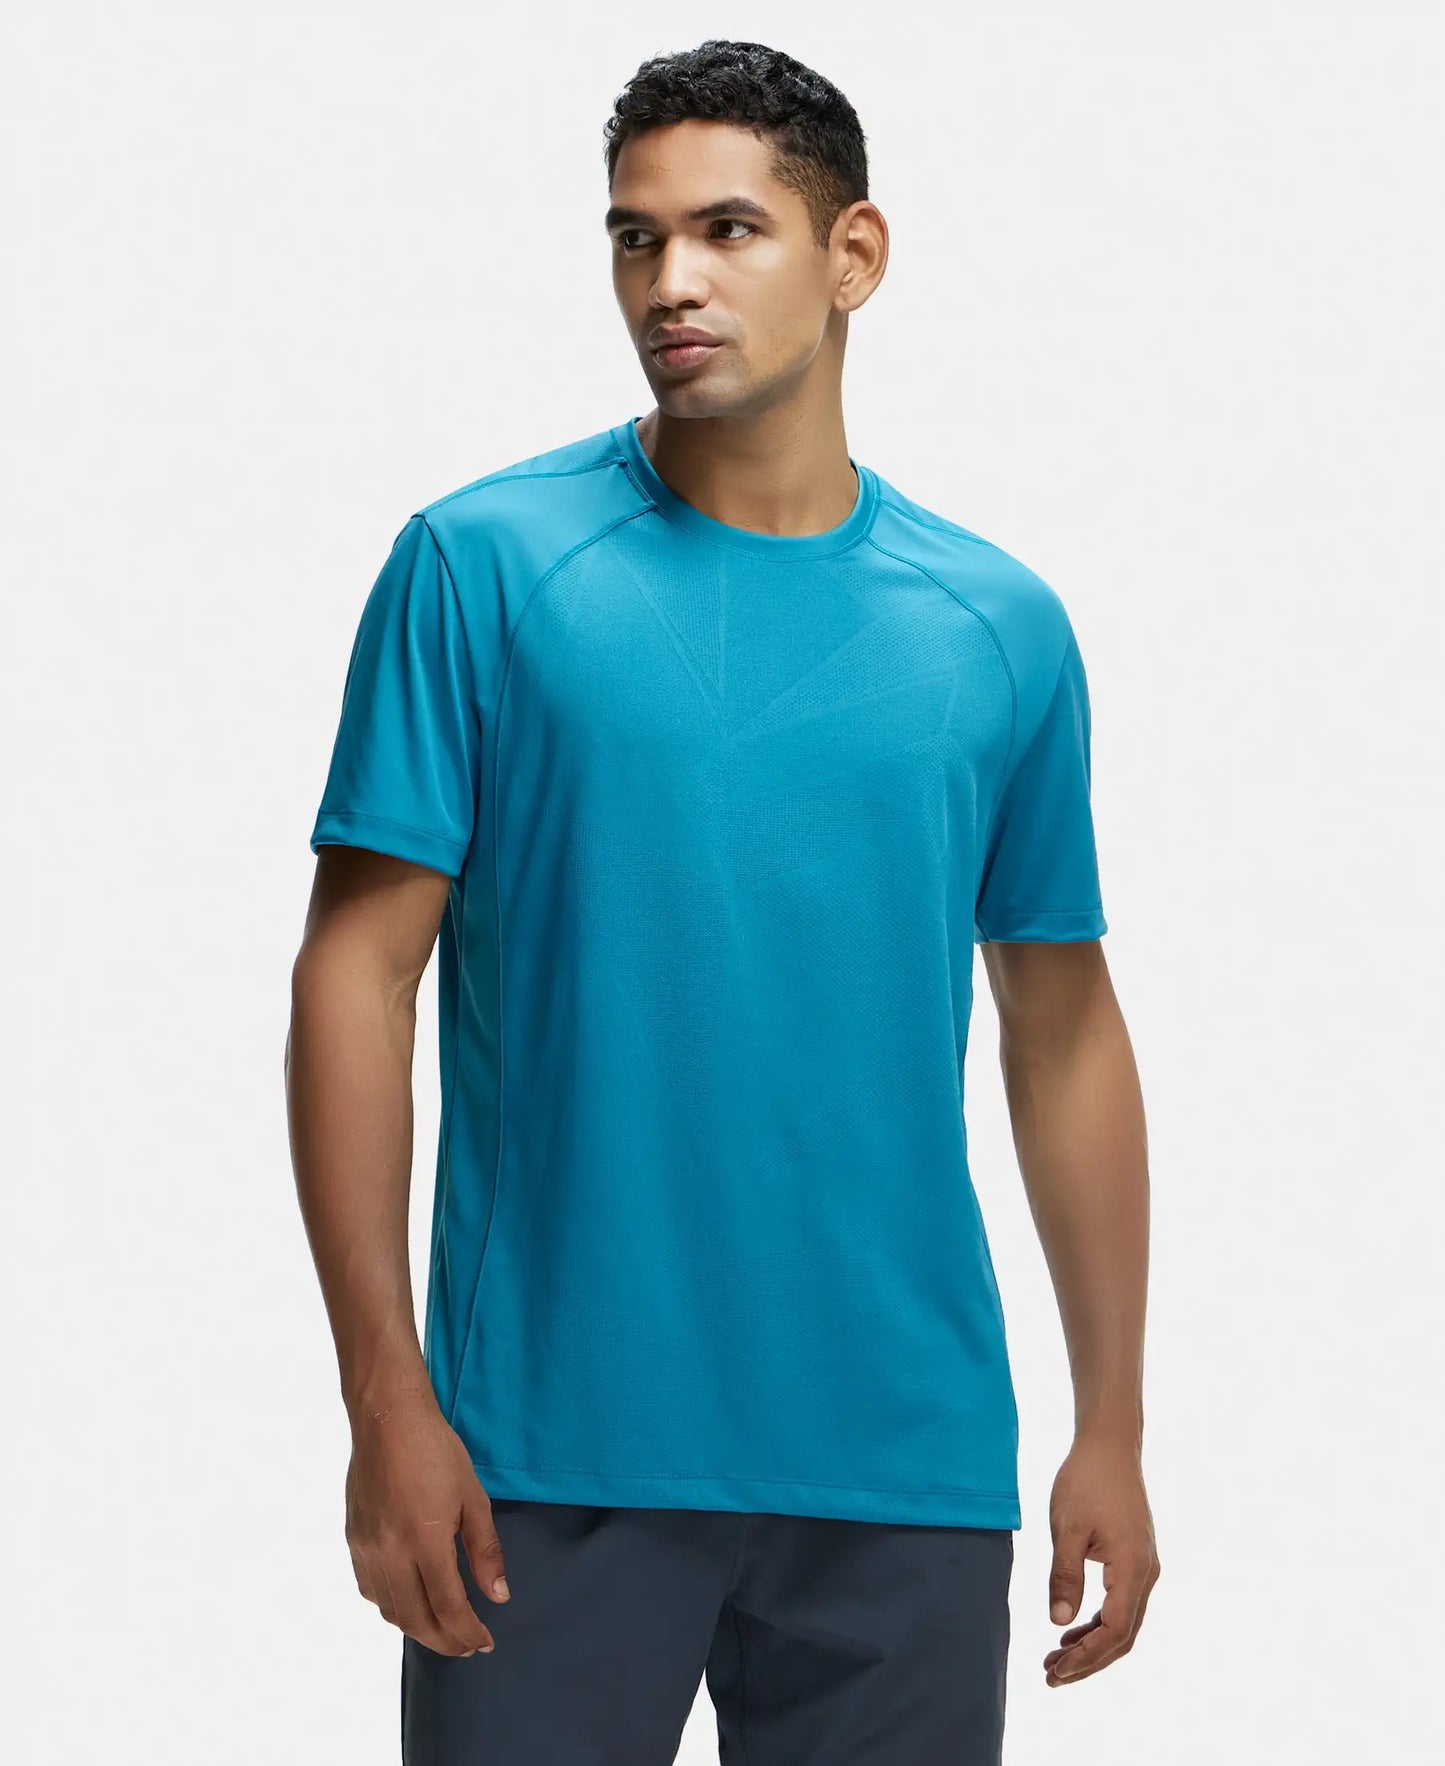 Microfiber Fabric Round Neck Half Sleeve T-Shirt with Breathable Mesh - Caribbean Sea-1